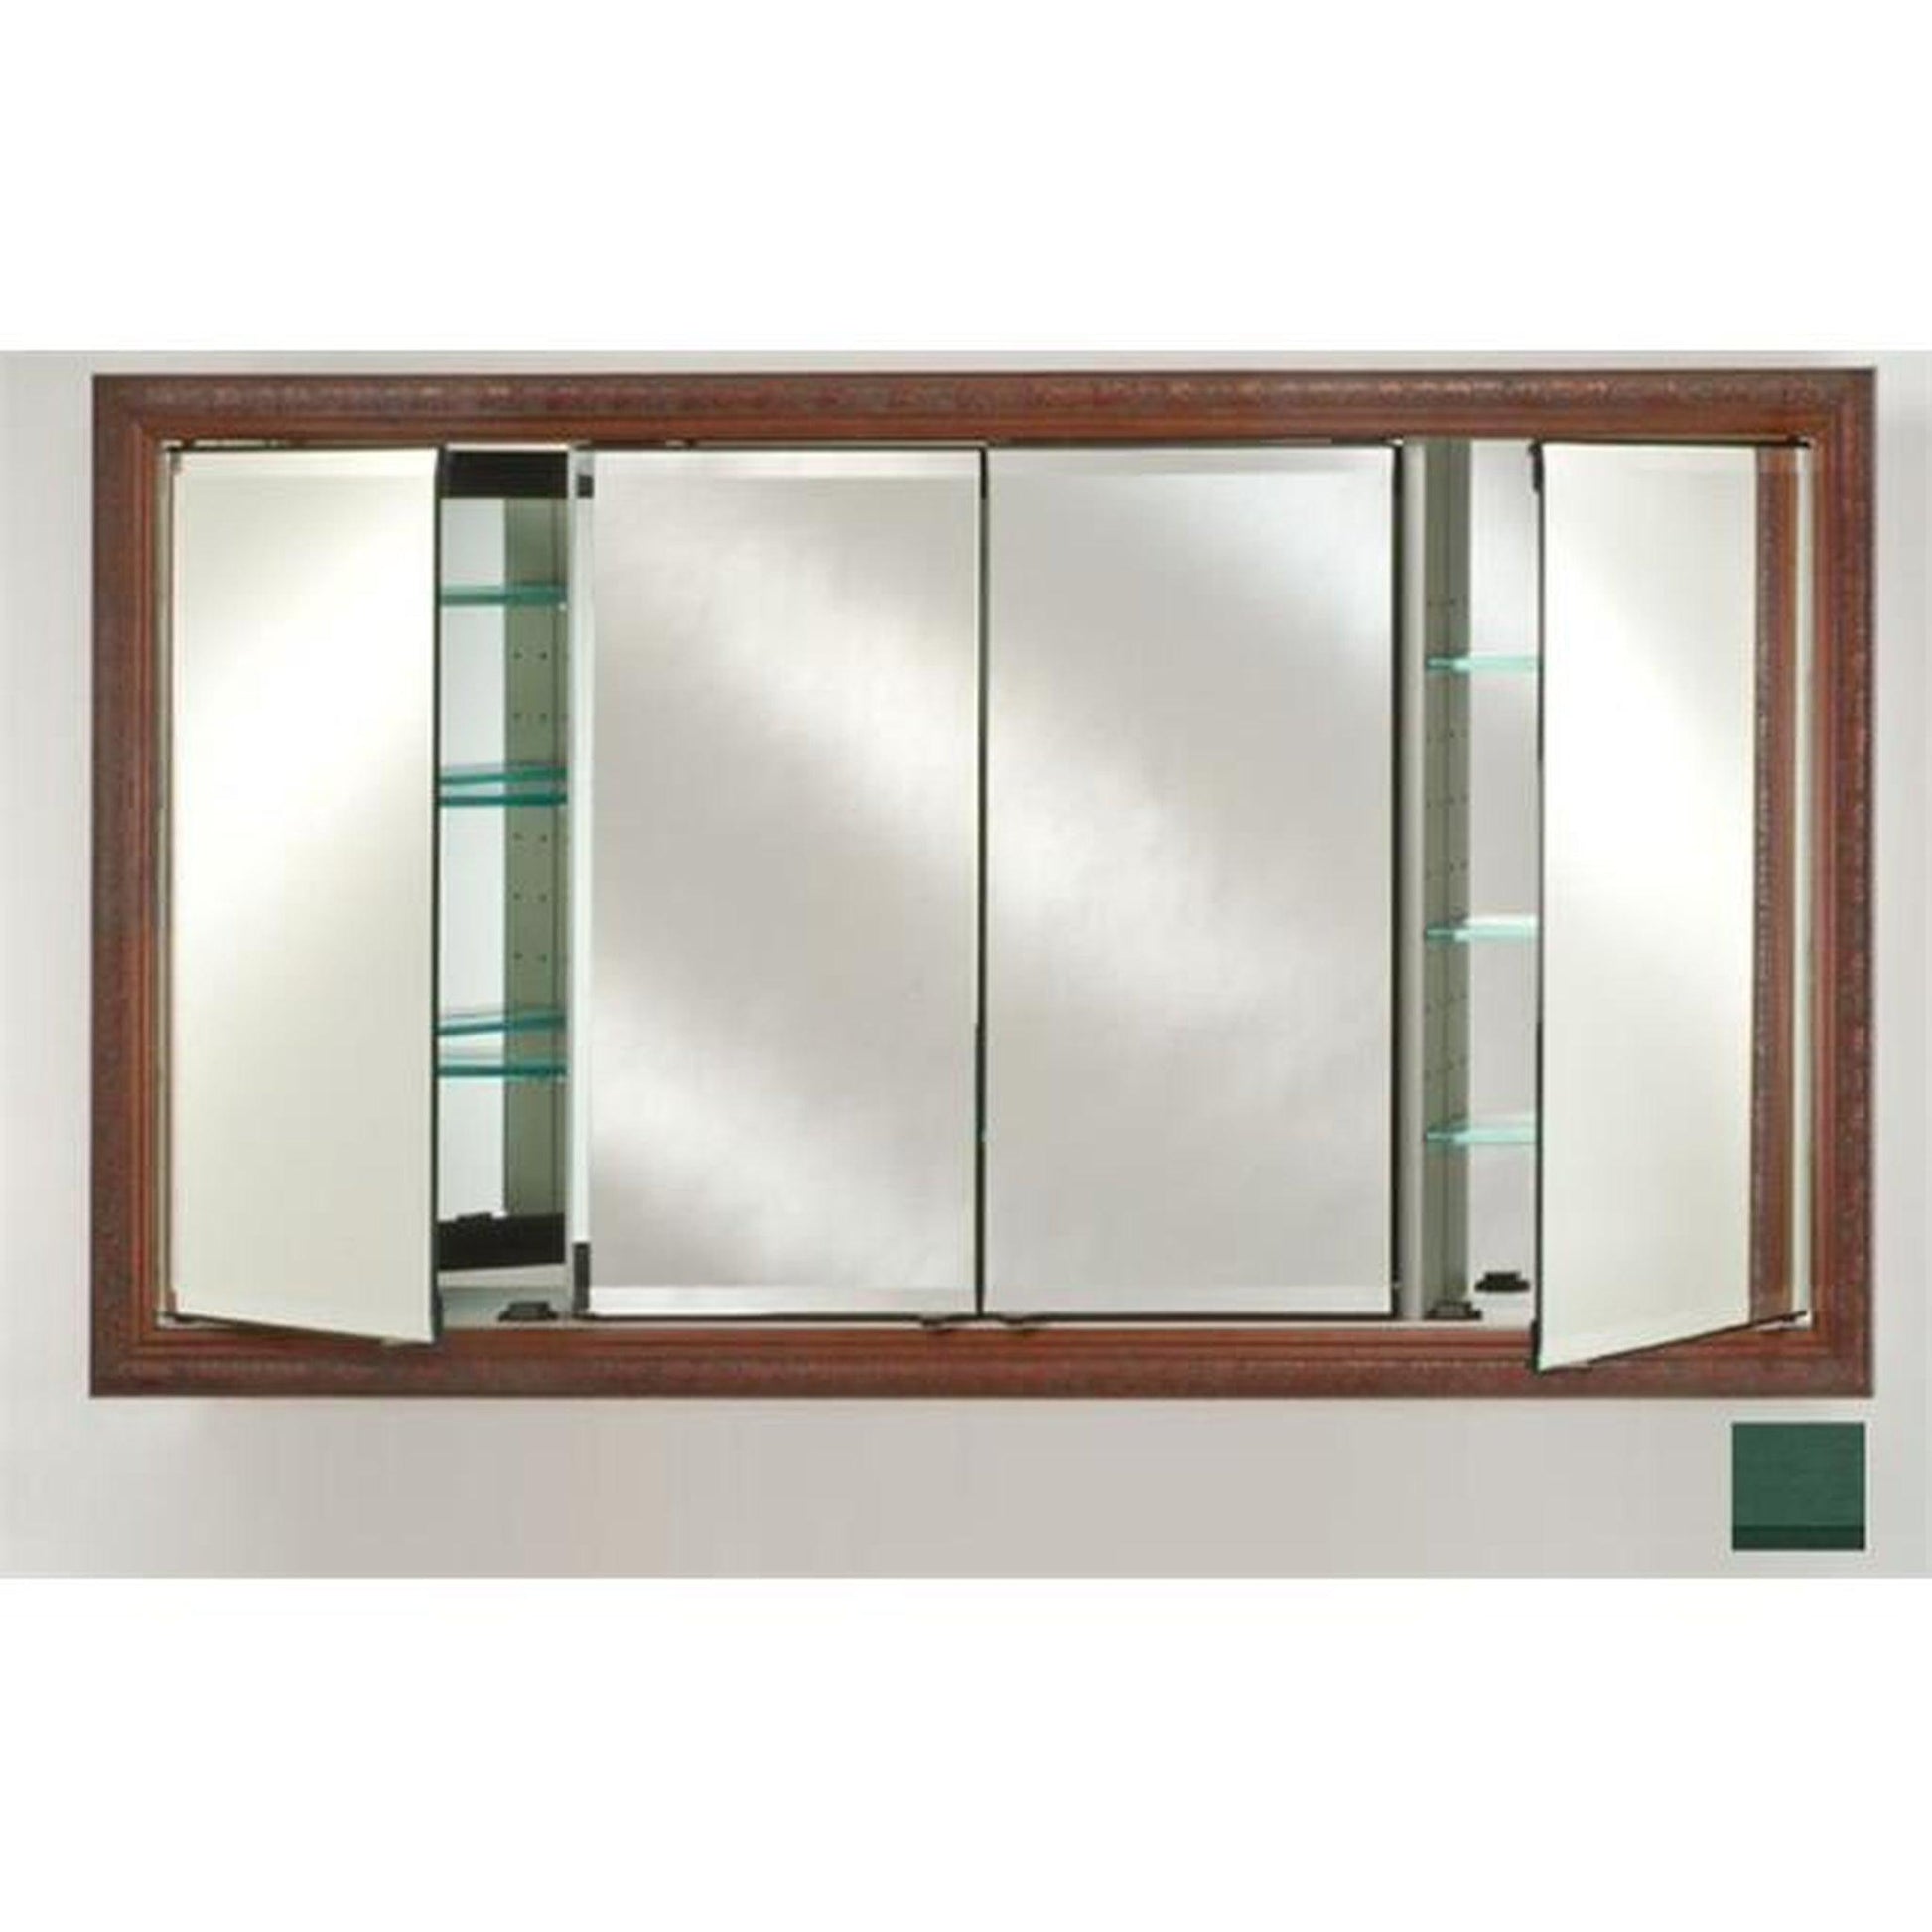 Afina Signature 63" x 36" Colorgrain Green Recessed Four Door Medicine Cabinet With Beveled Edge Mirror